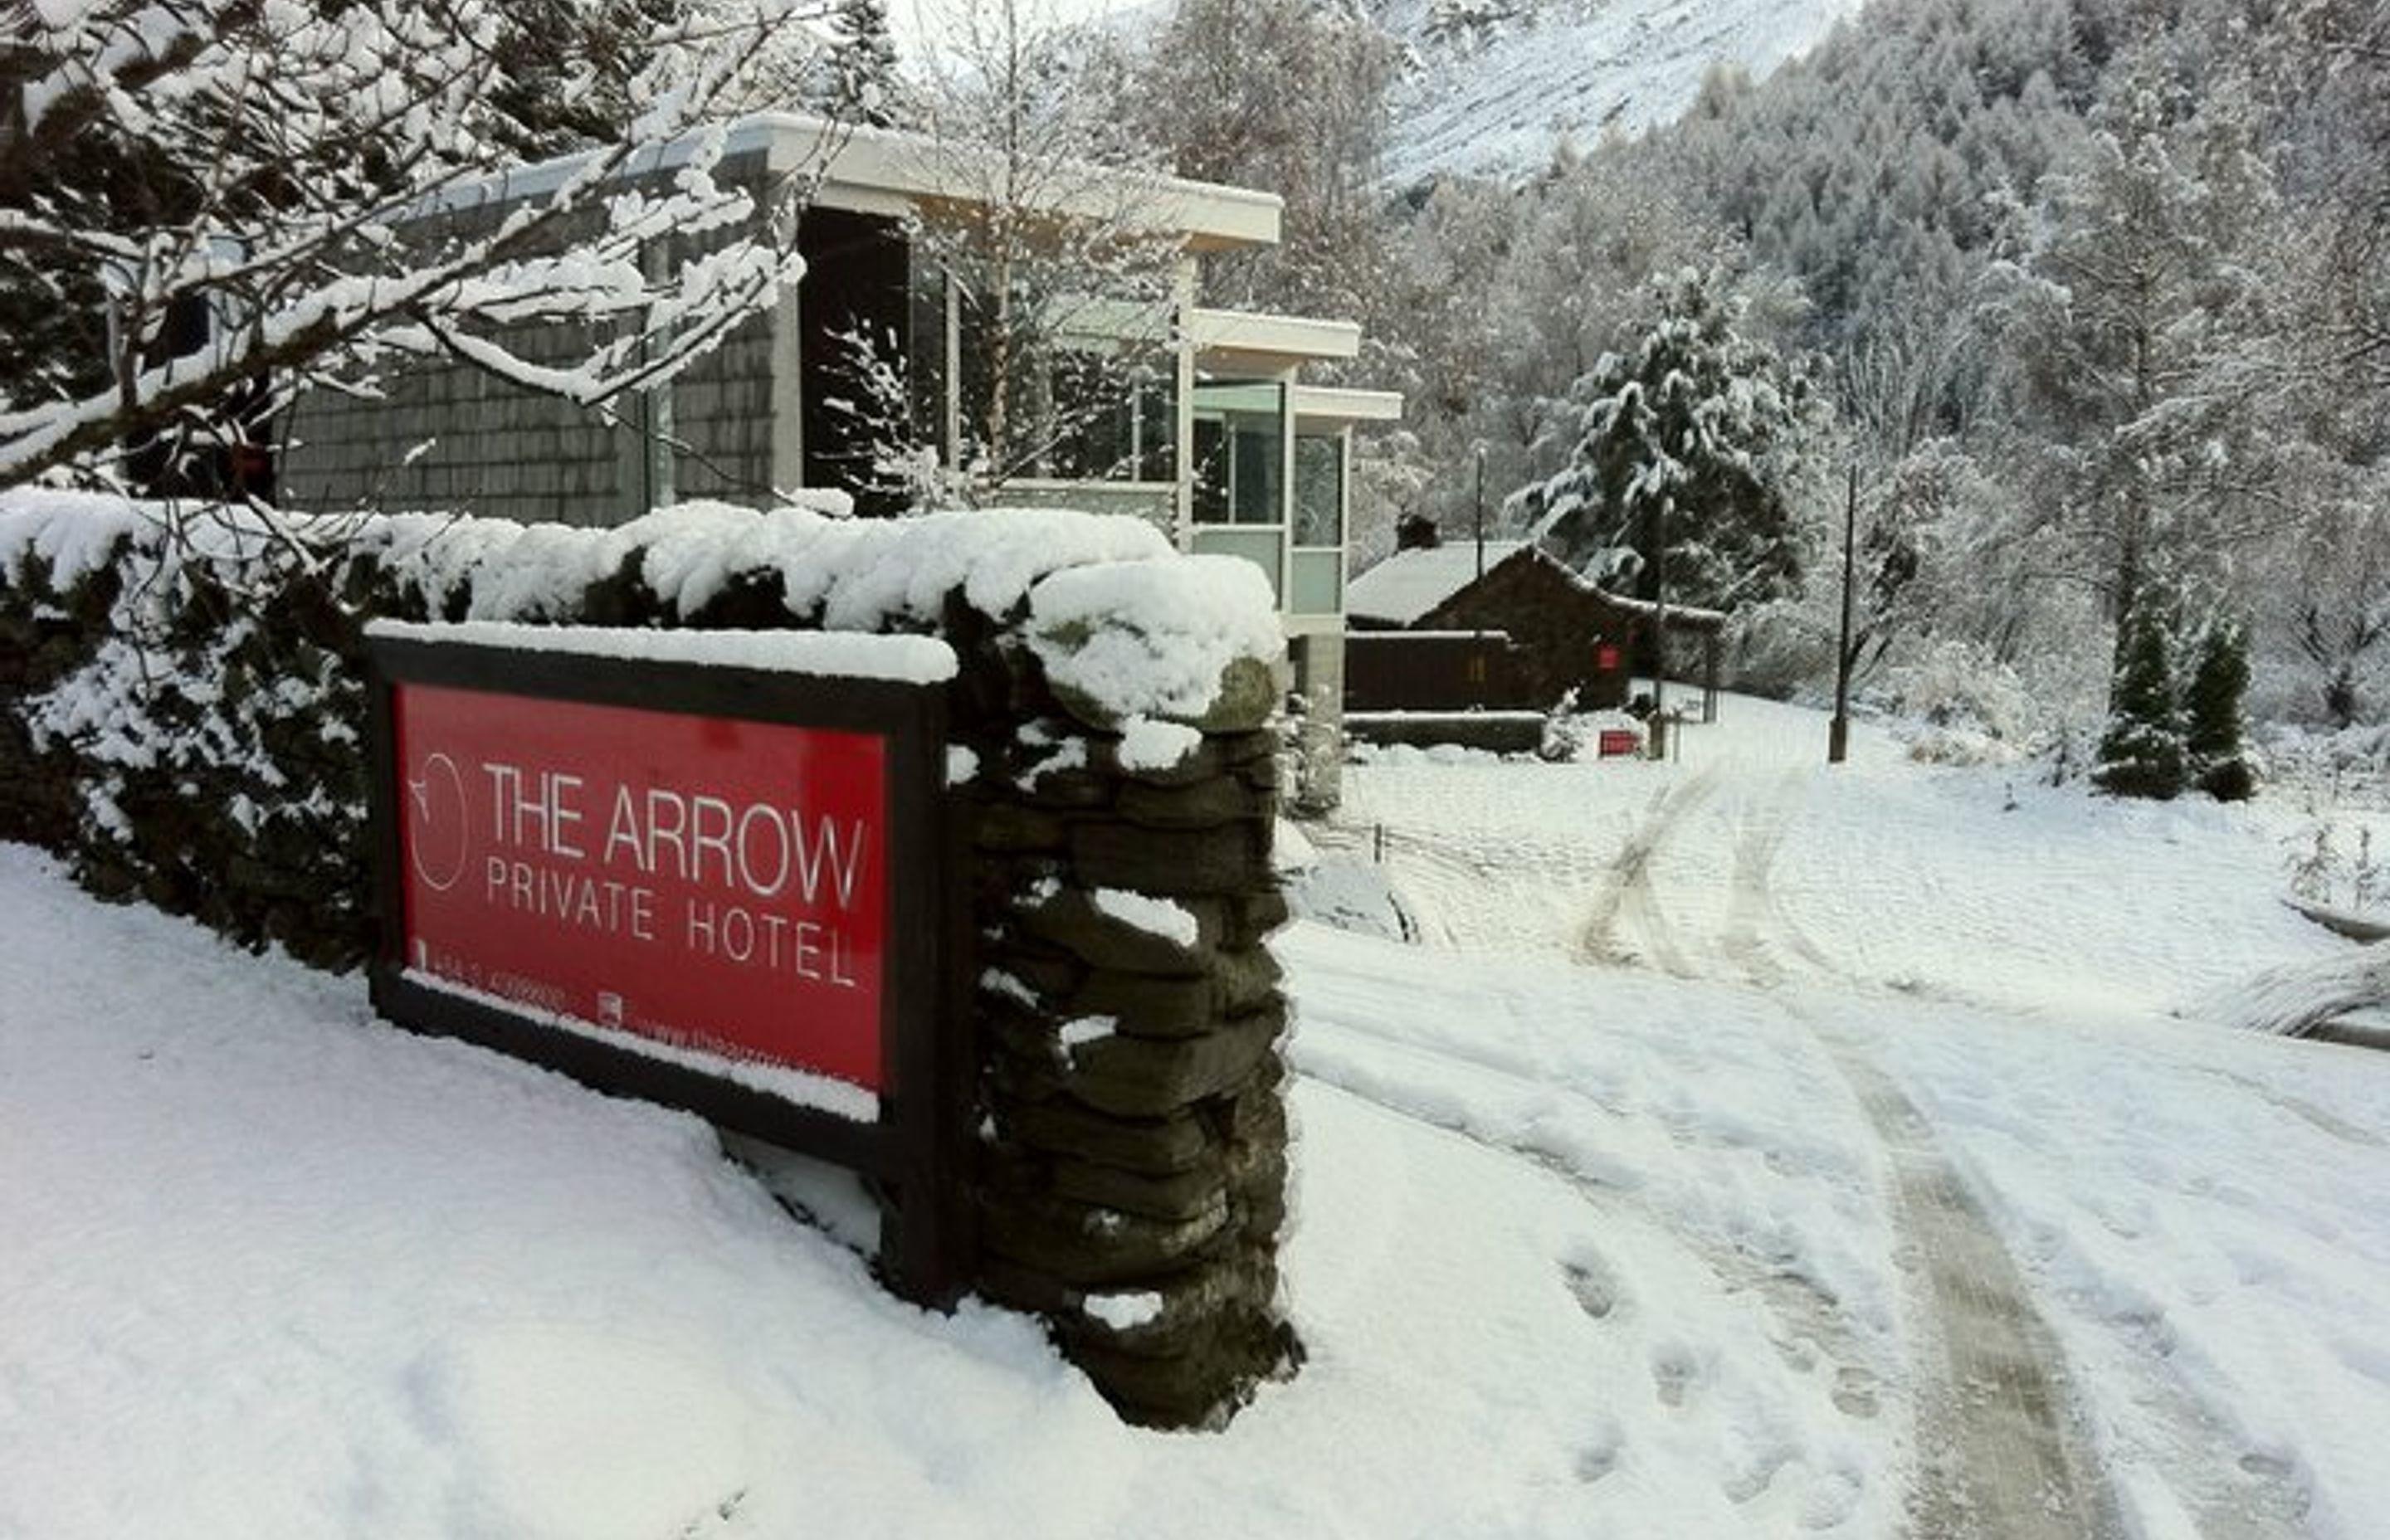 The Arrow Private Hotel